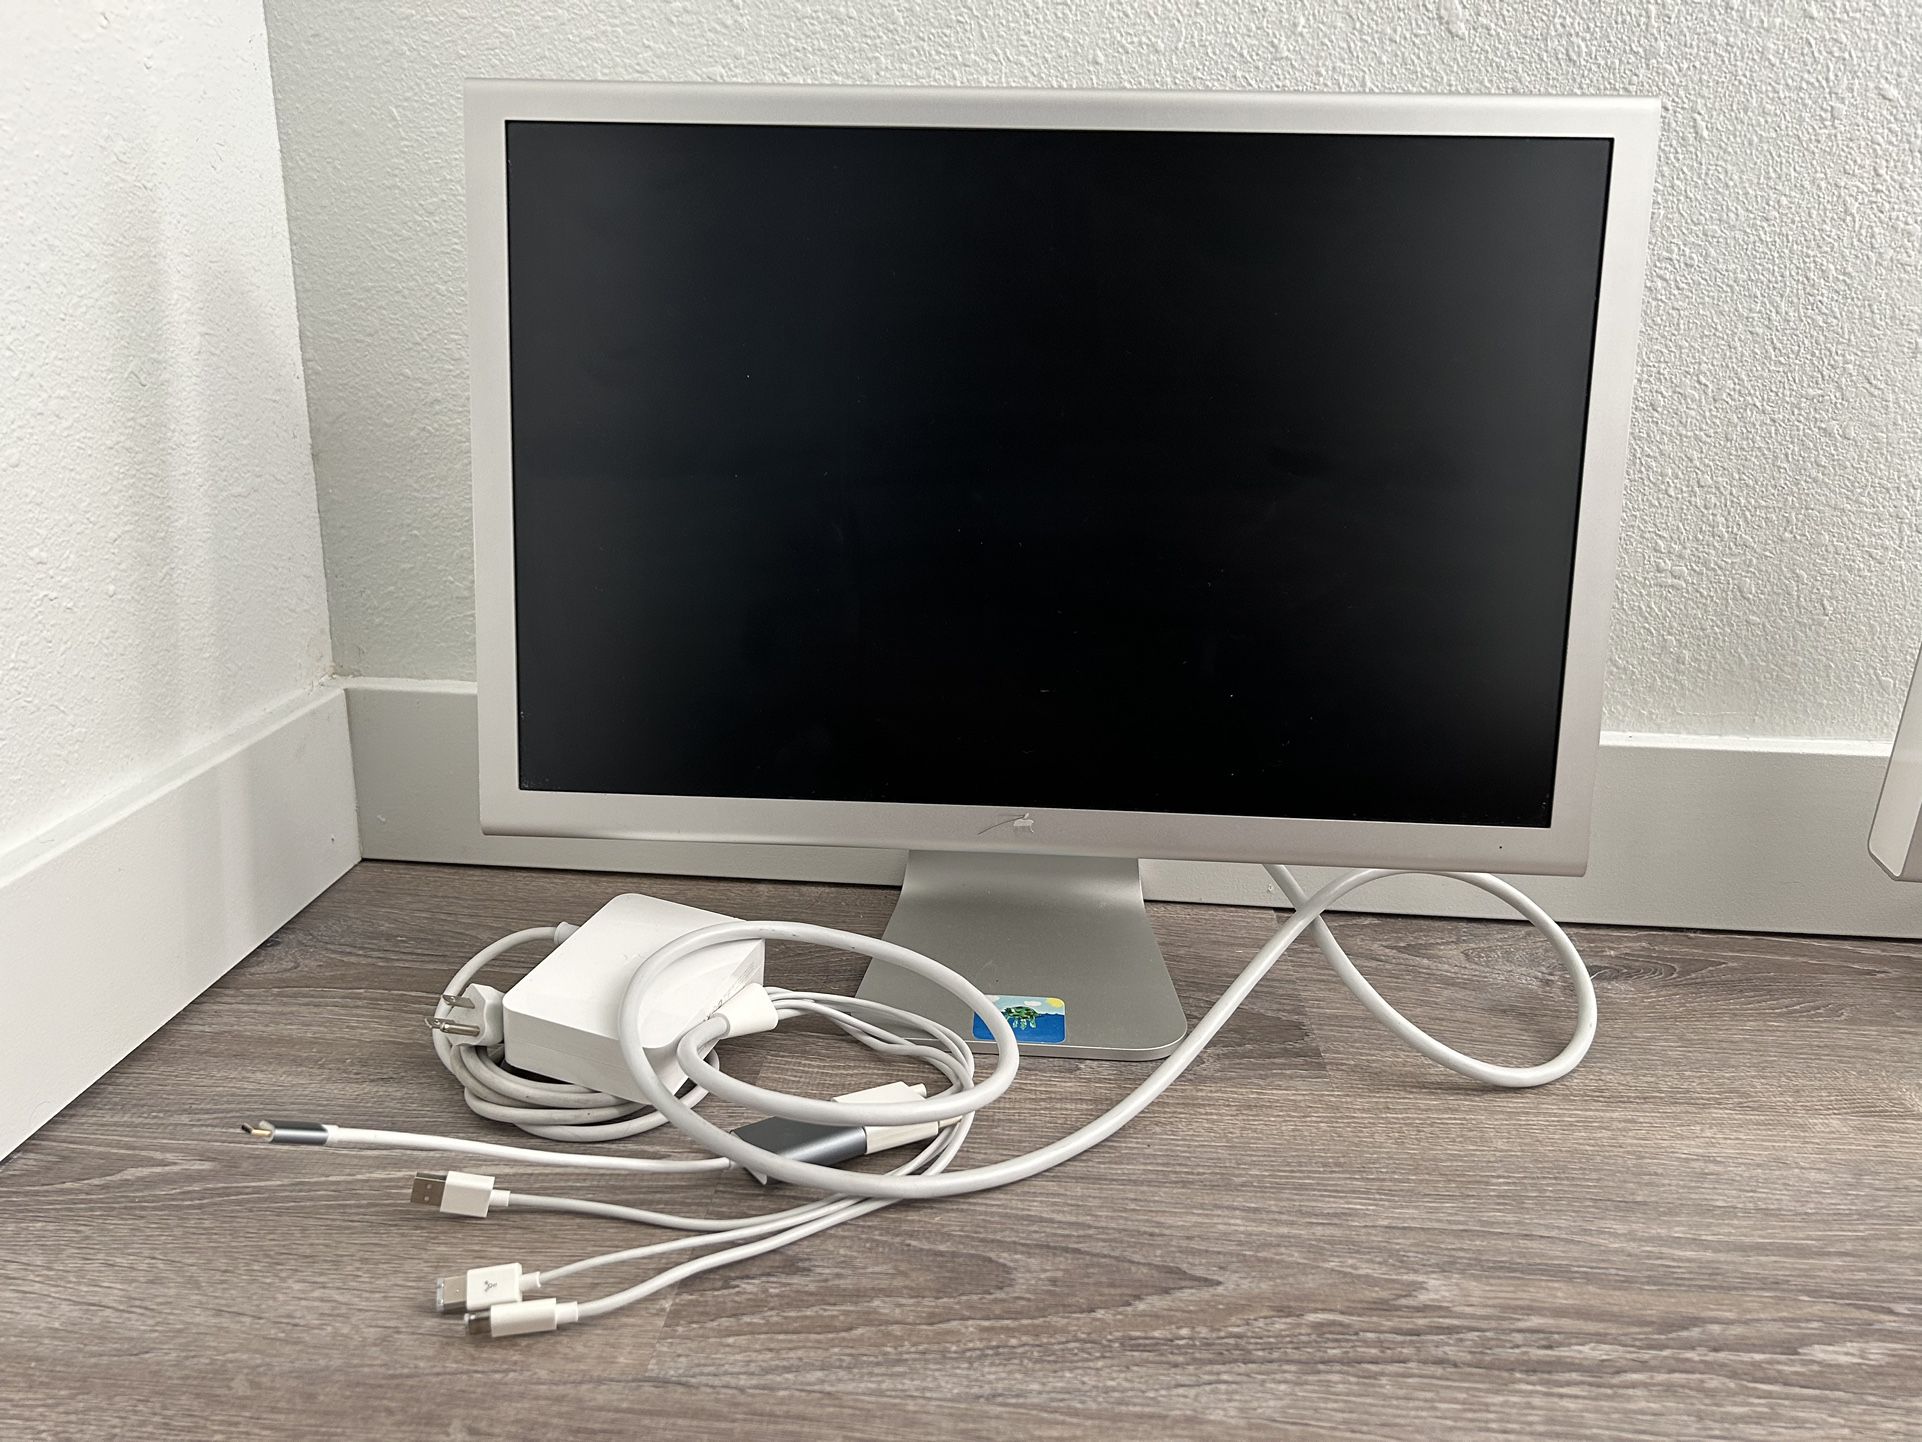  One (1) Apple Cinema Display Monitor